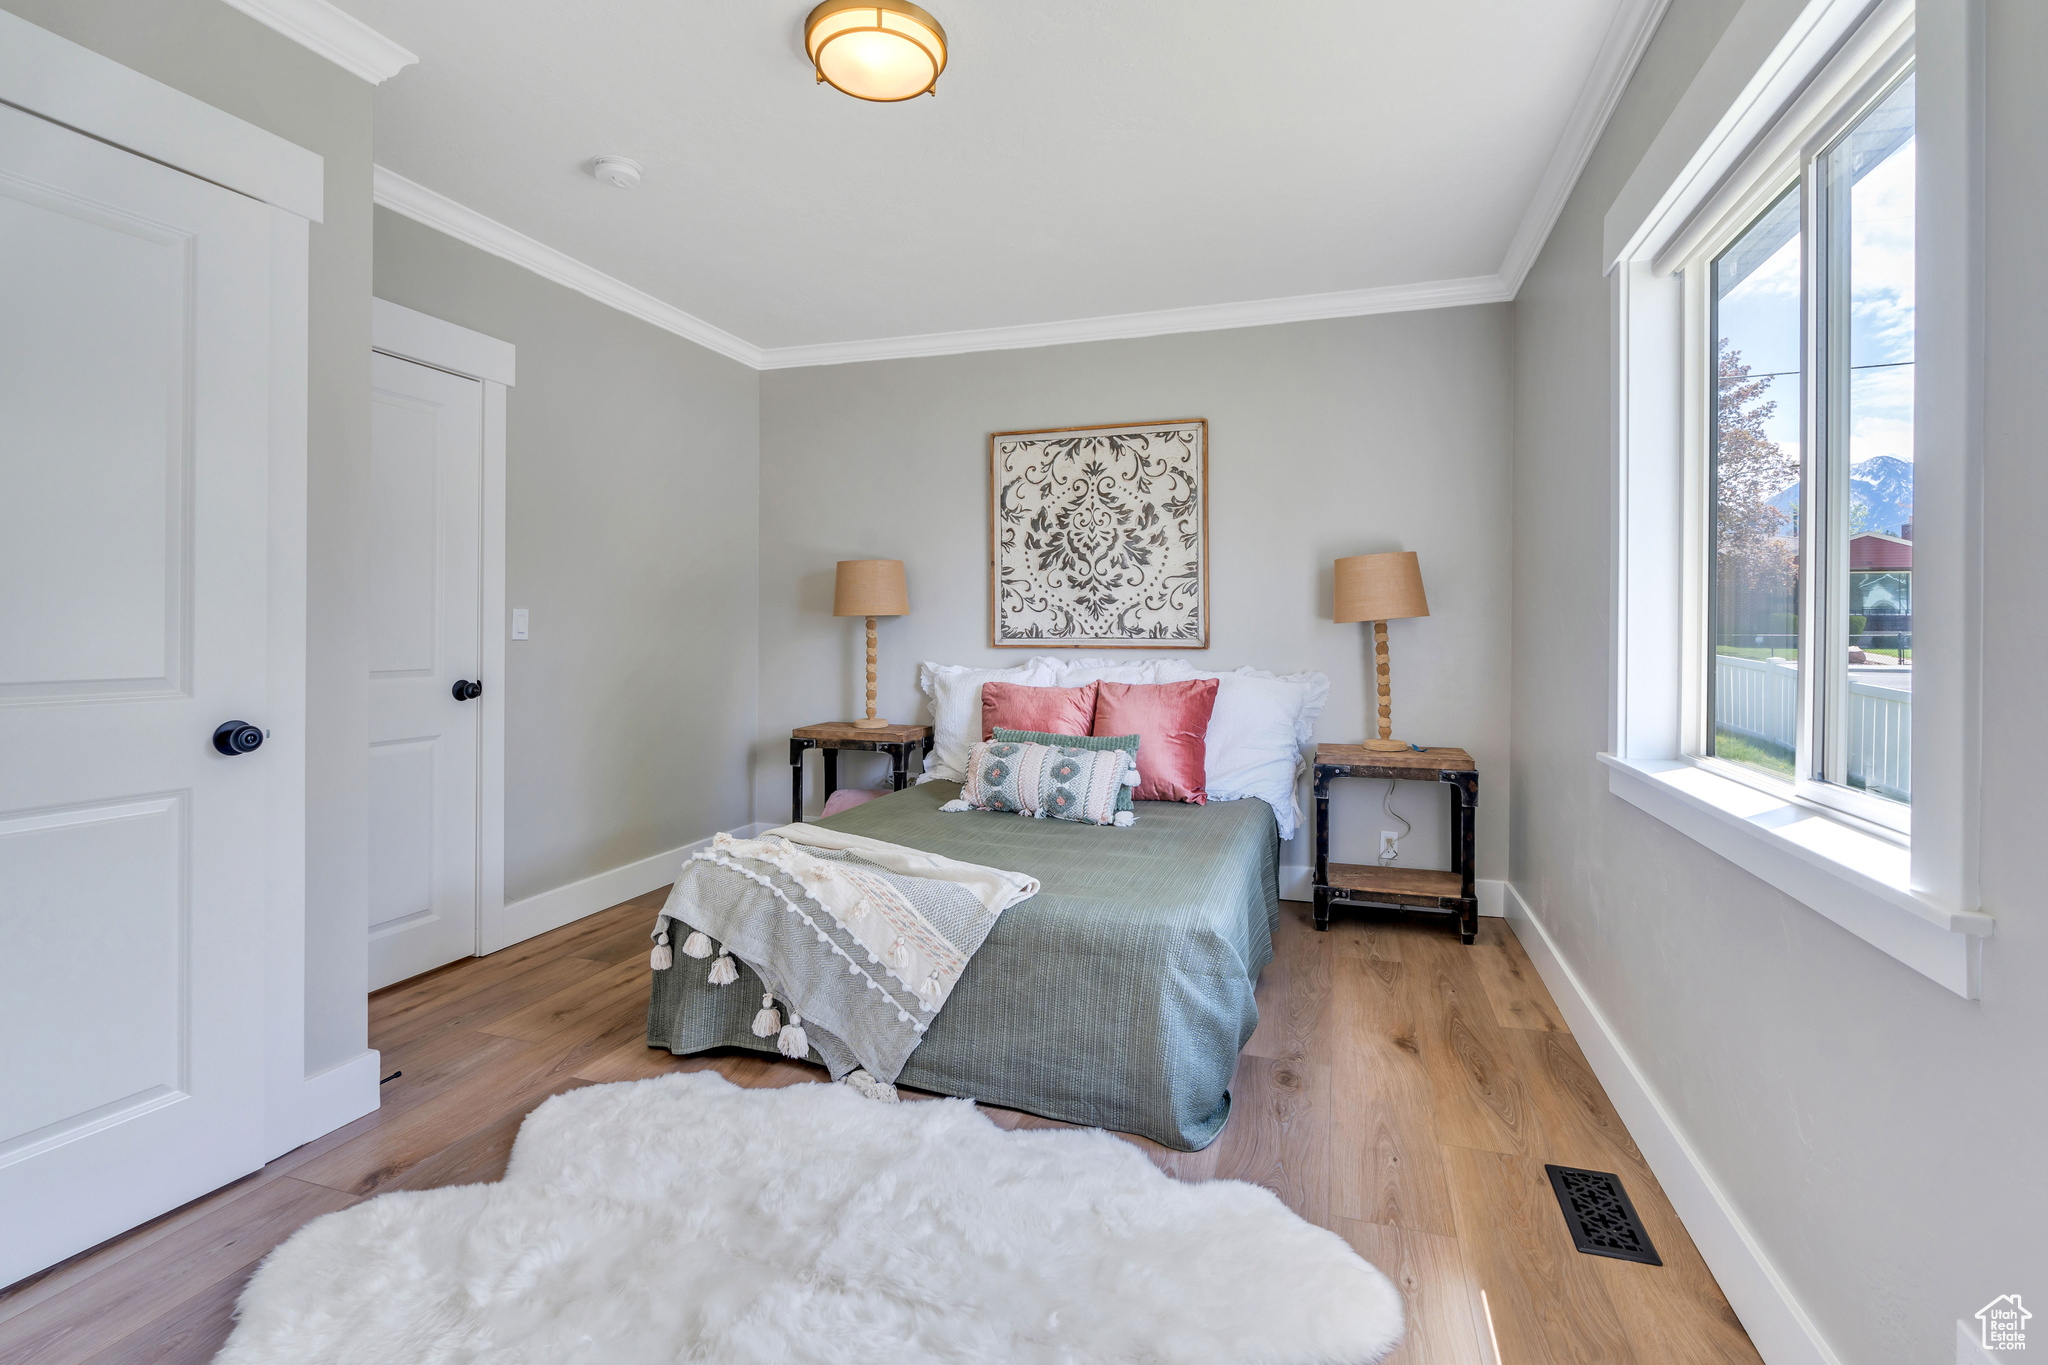 Bedroom featuring crown molding, light hardwood / wood-style floors, and multiple windows